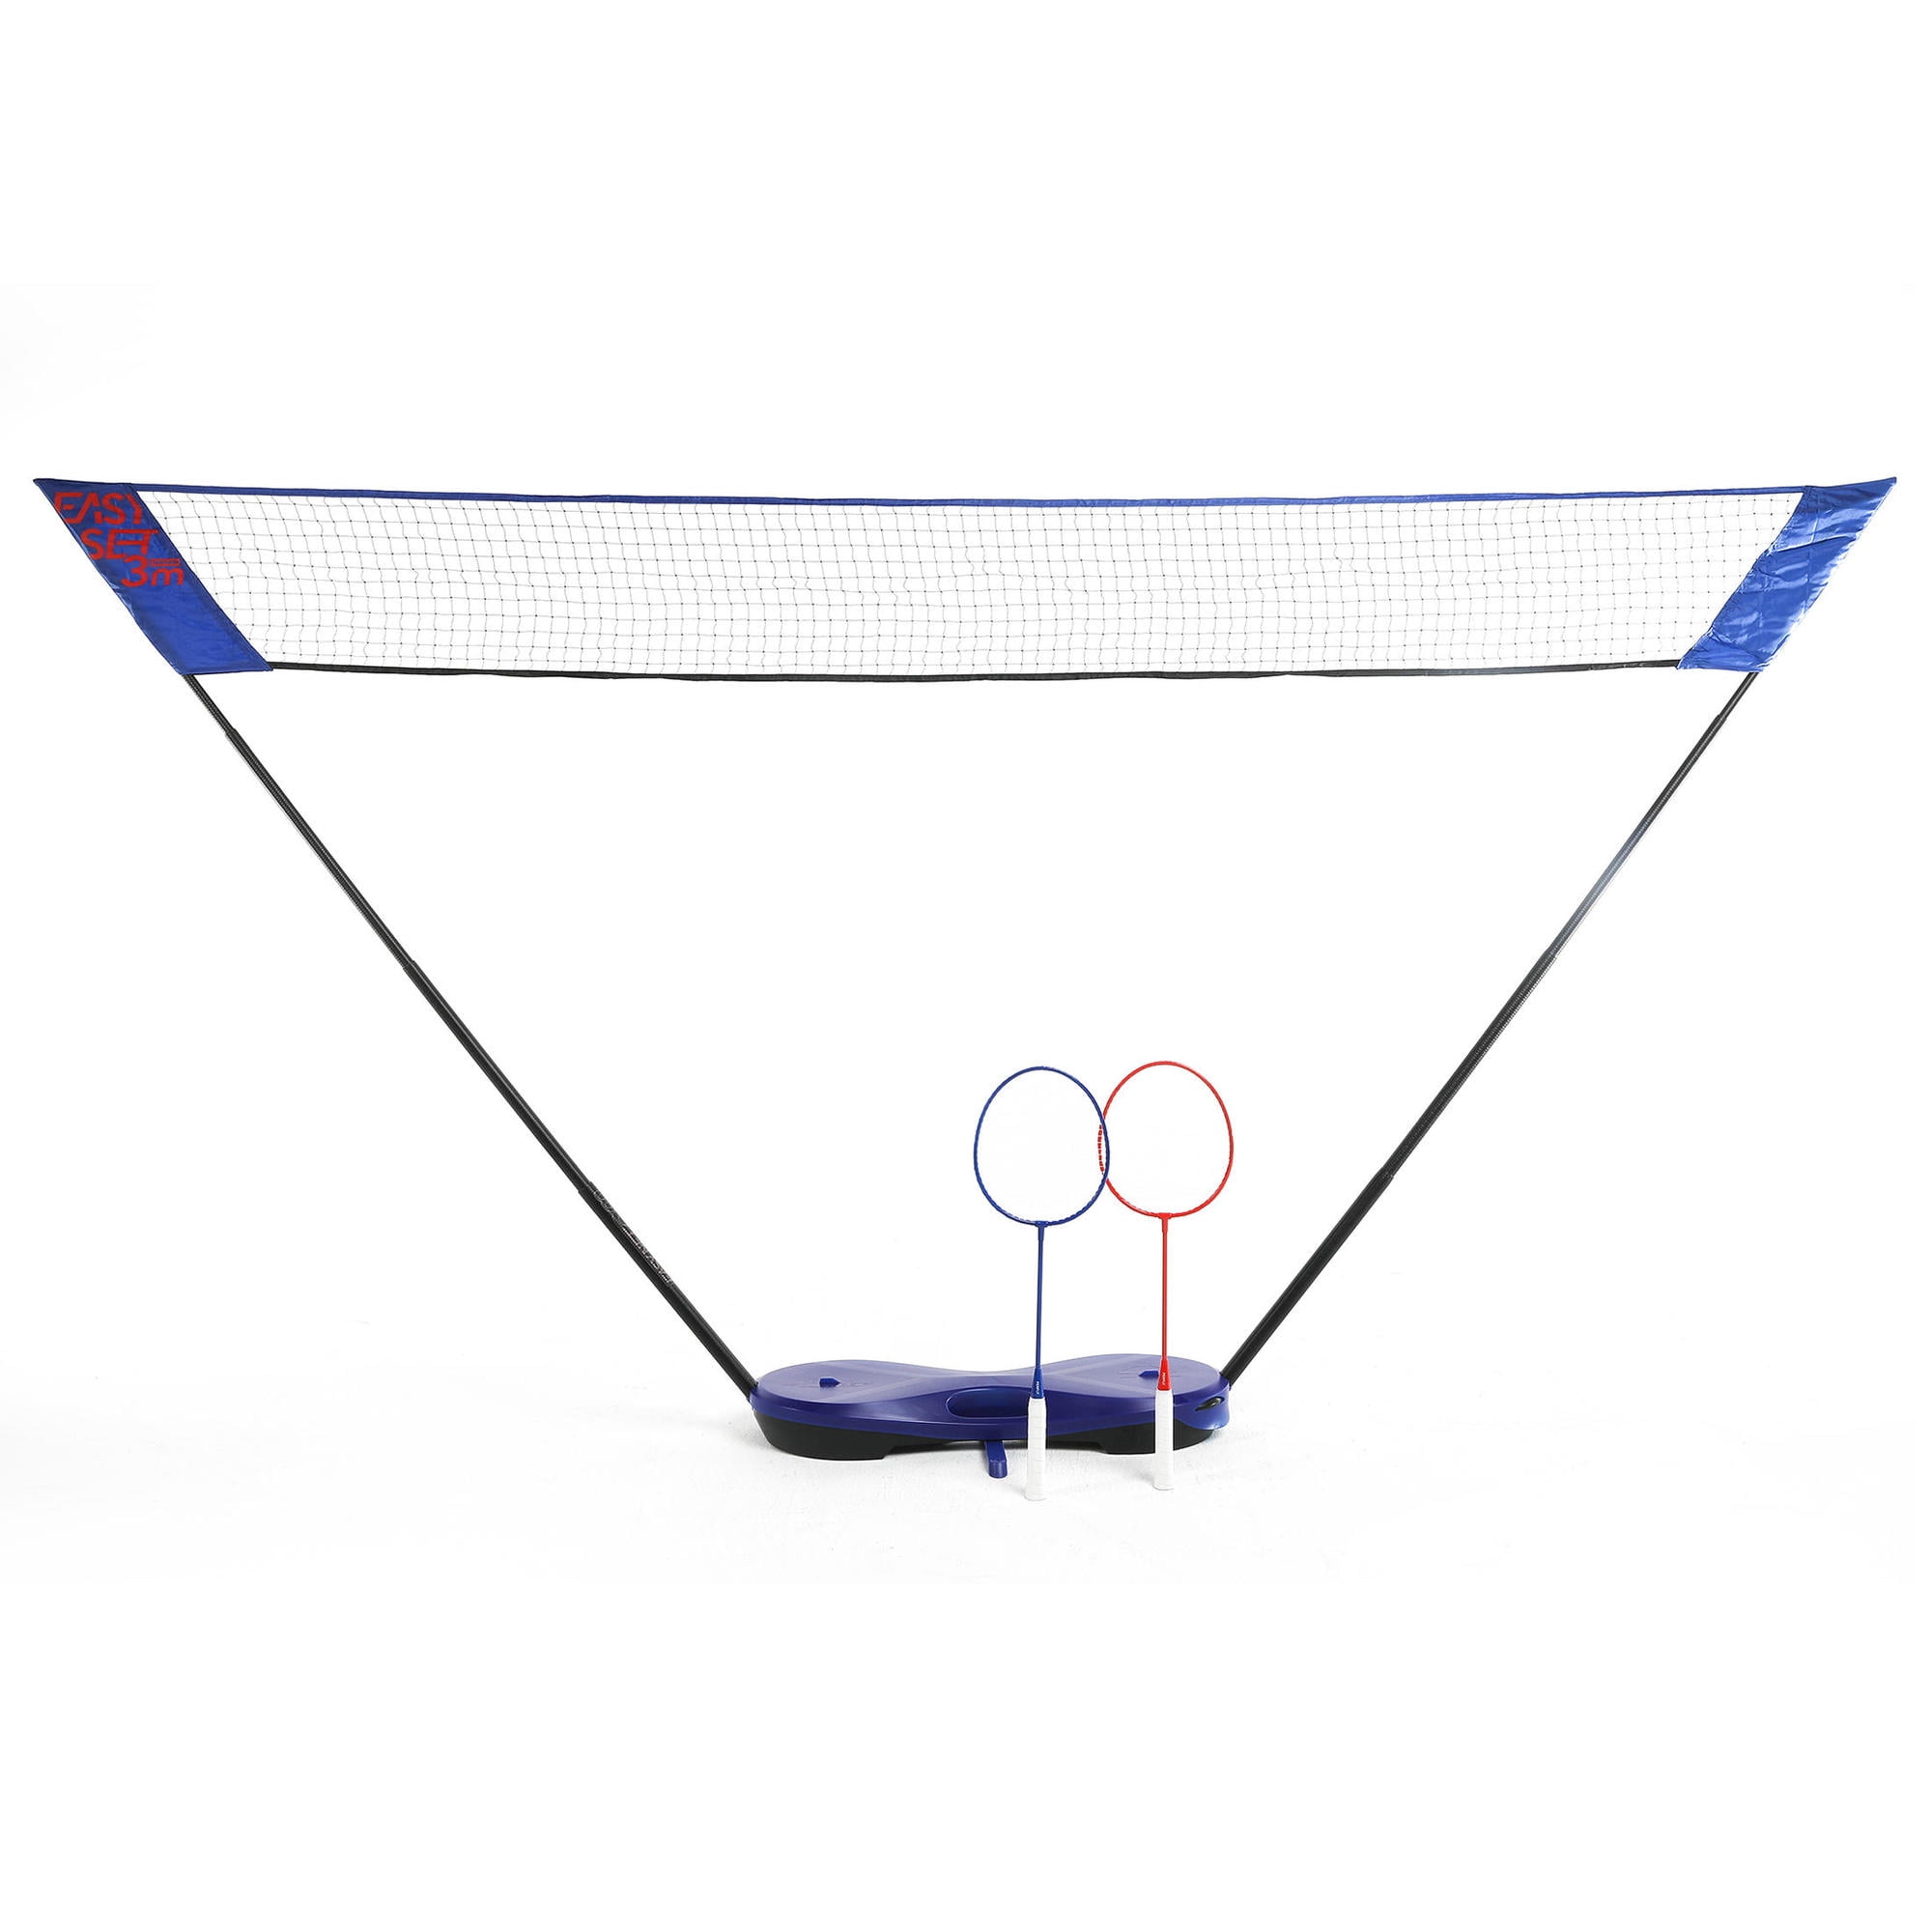 Badminton EastPoint Sports Easy Setup Regulation Size Set,Minor Box damaged 21A 